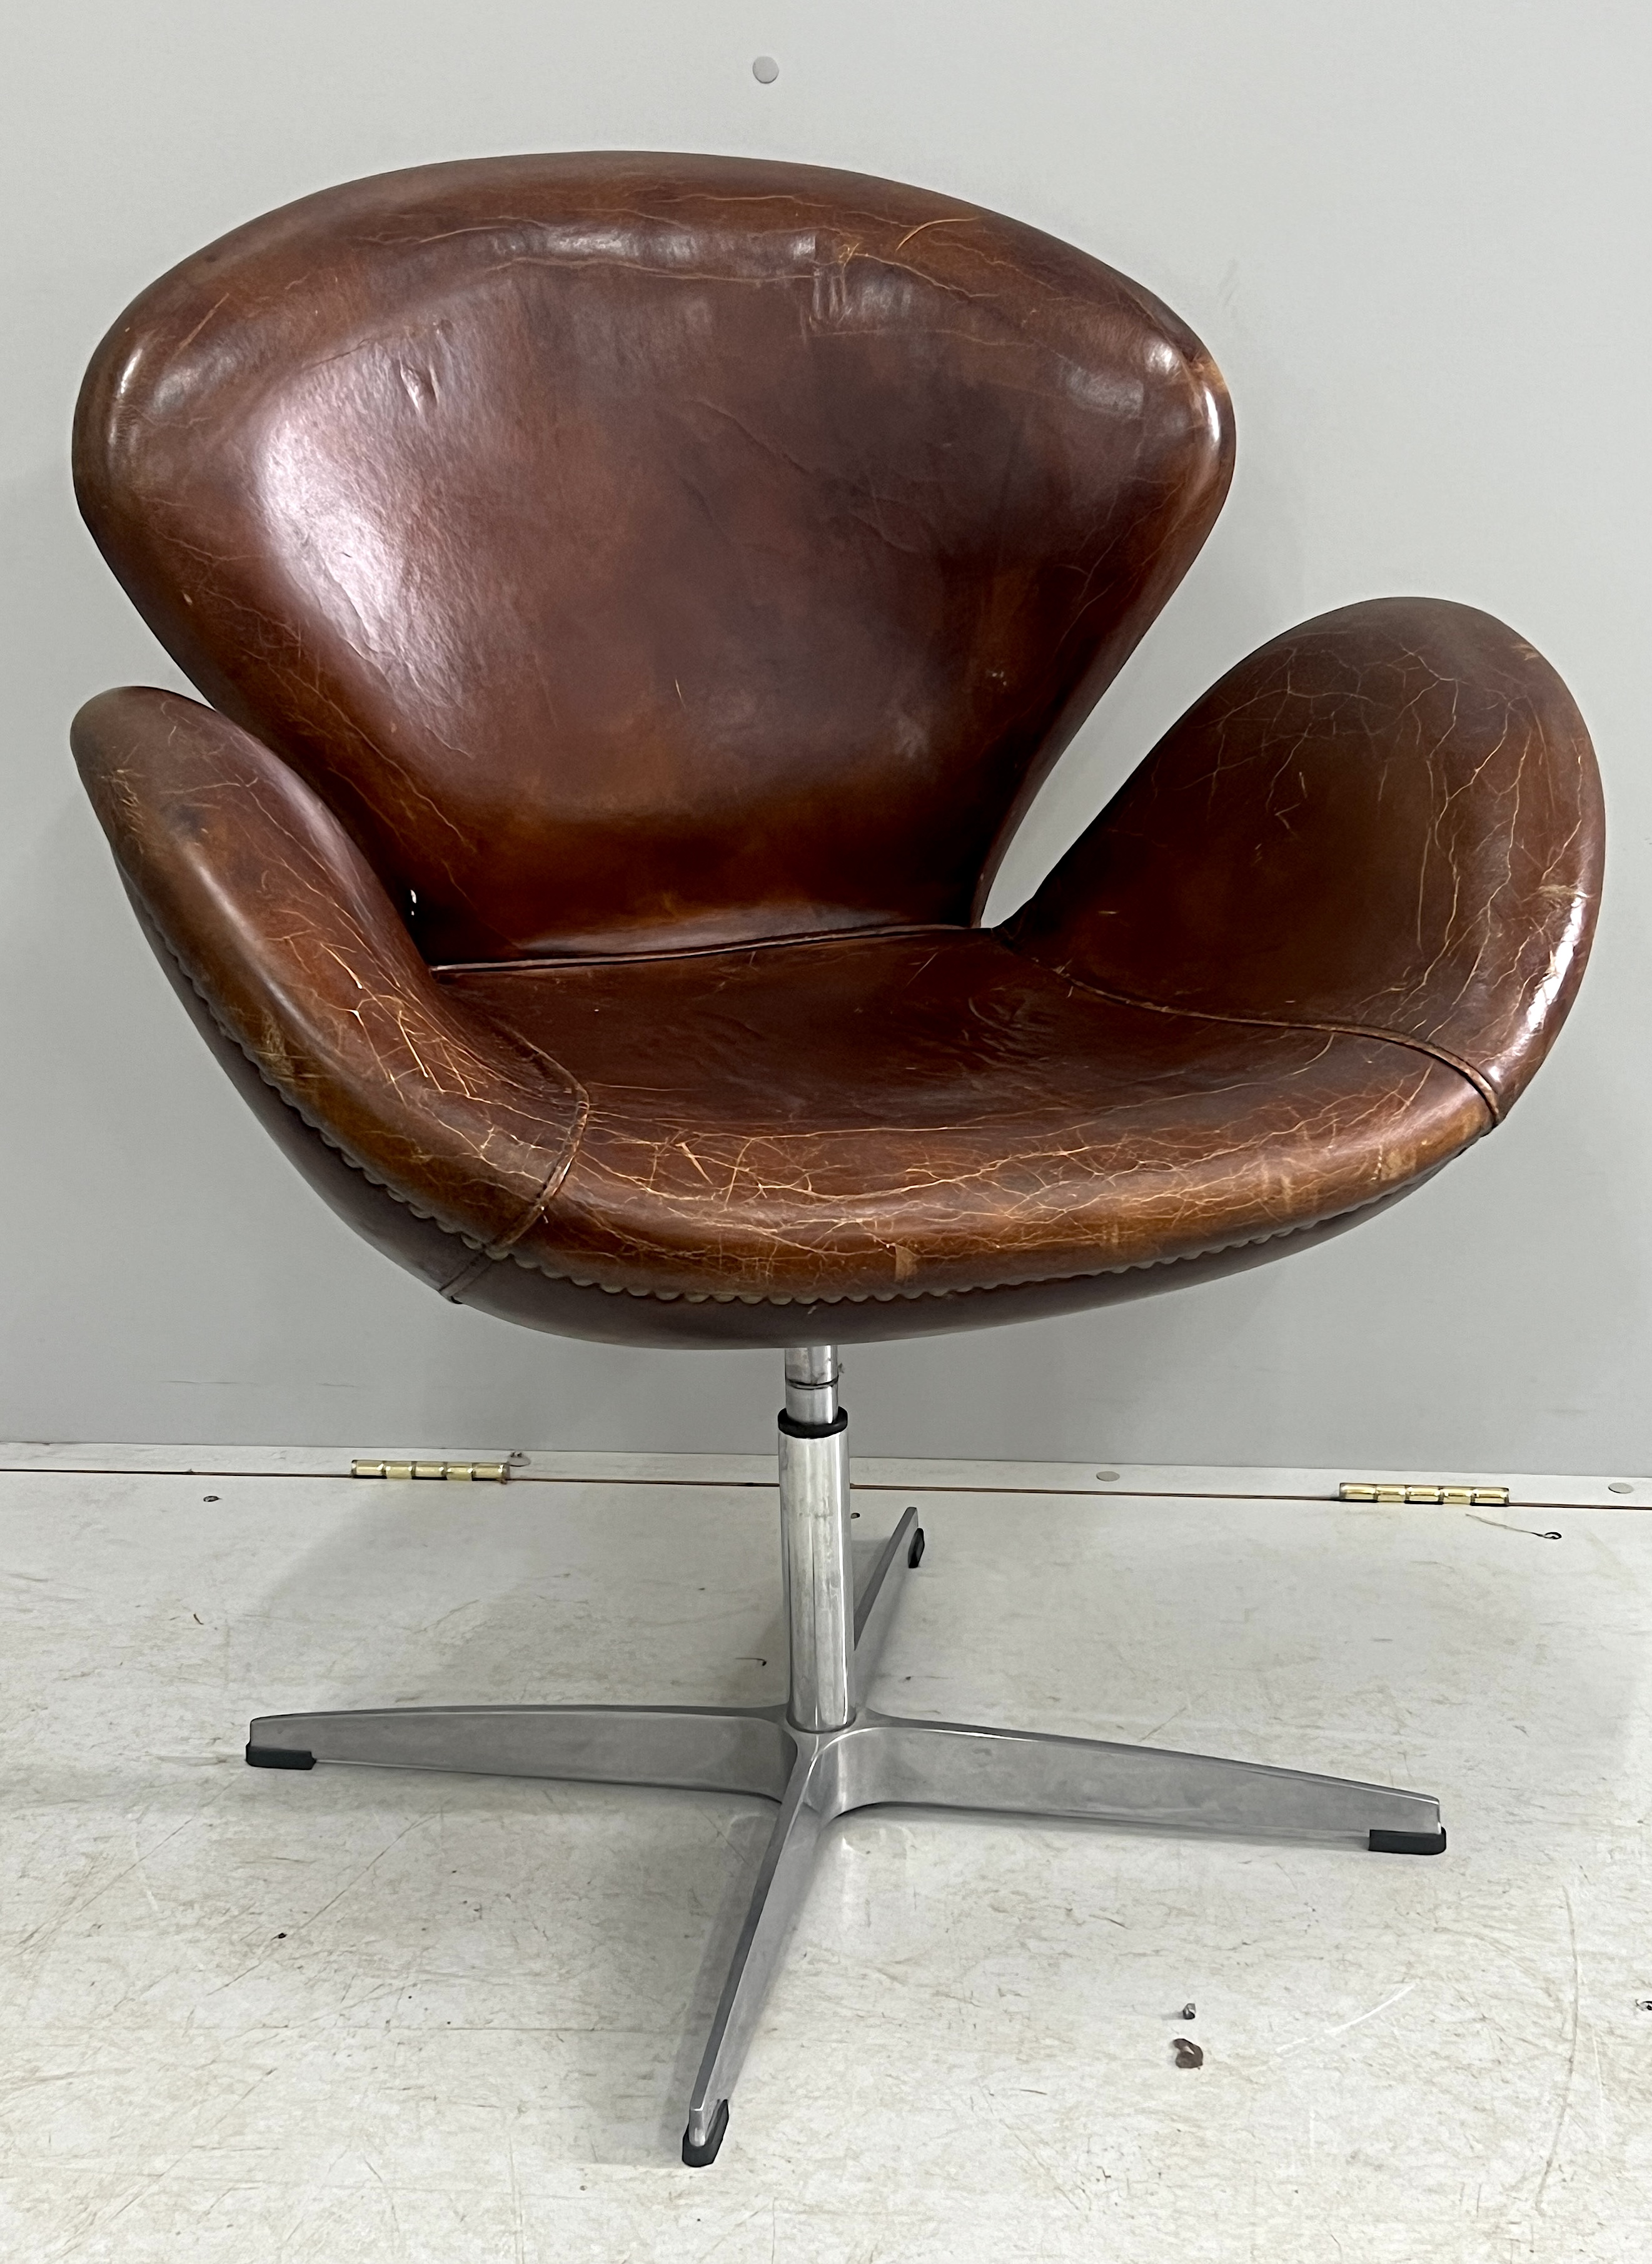 A tan leather petal chair, width 70cm, depth 42cm, height 84cm